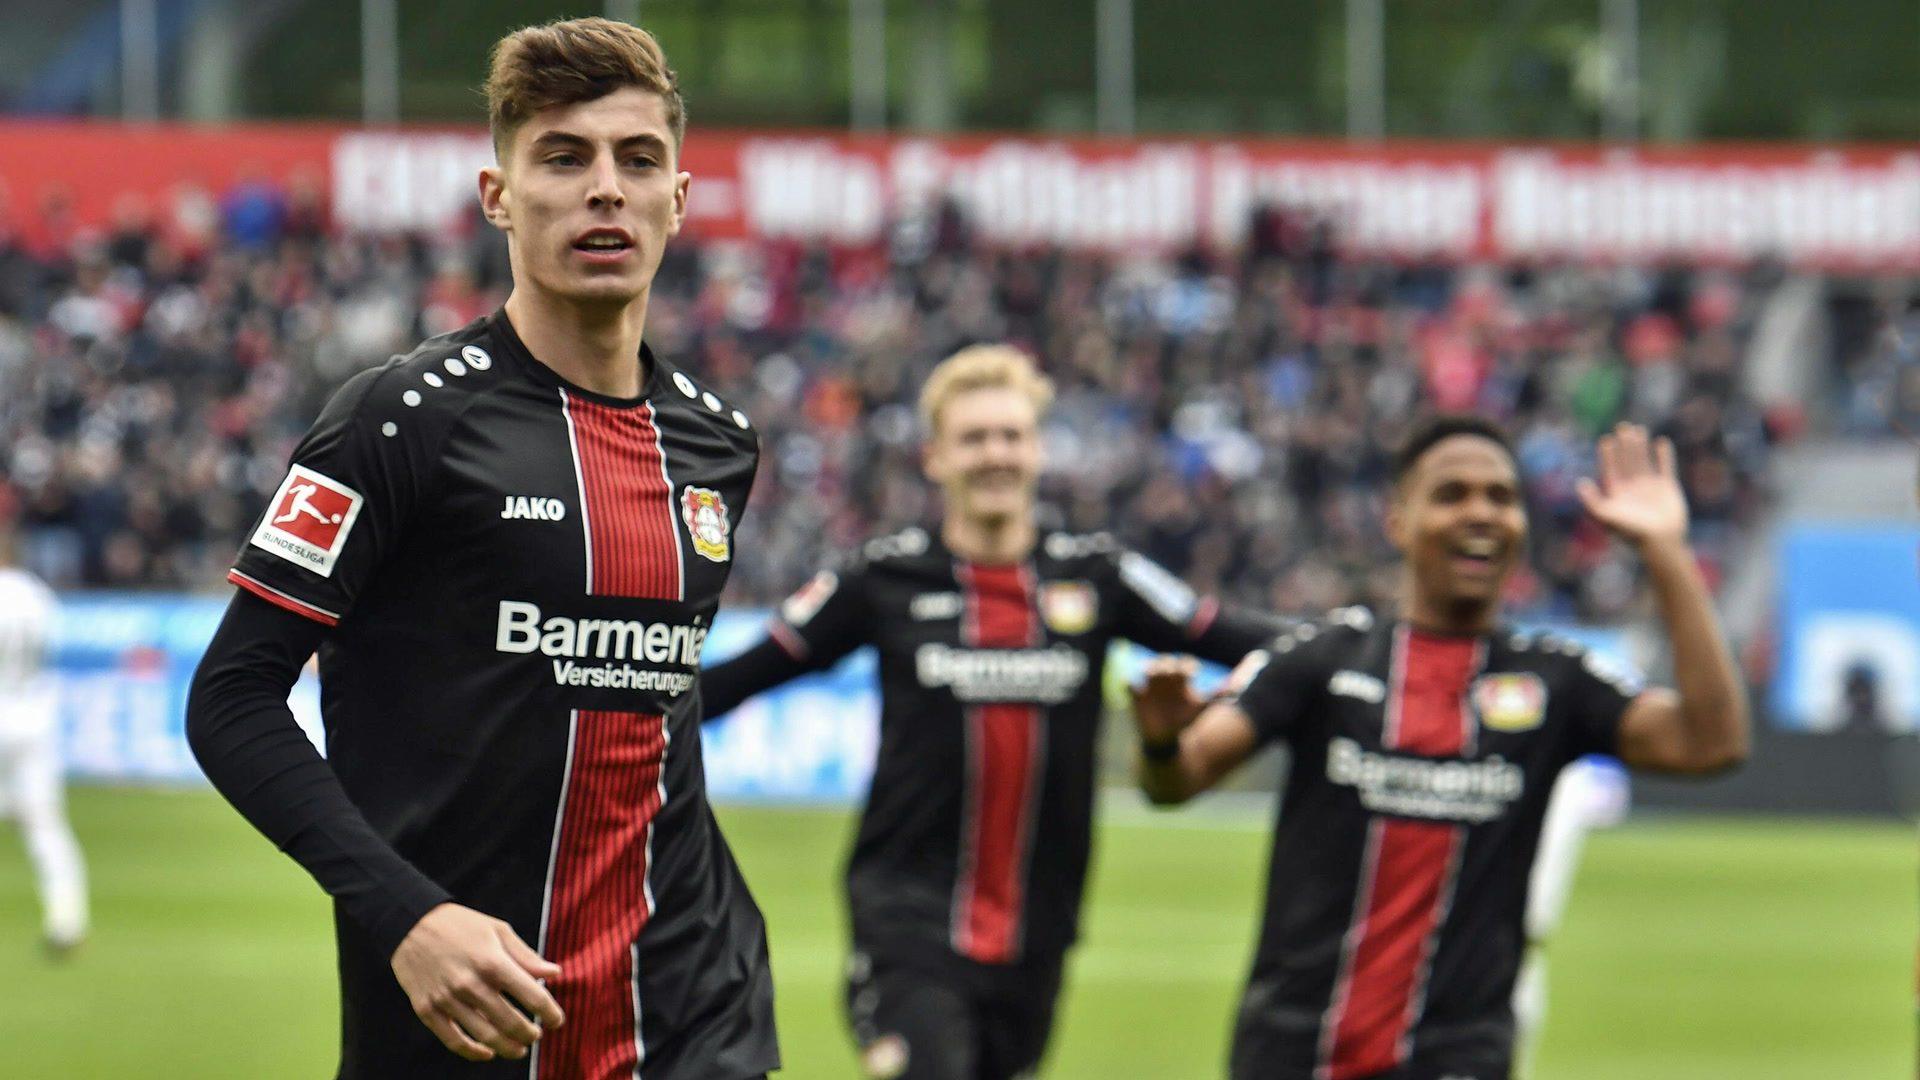 Bundesliga. Kai Havertz on target again as Bayer Leverkusen smash